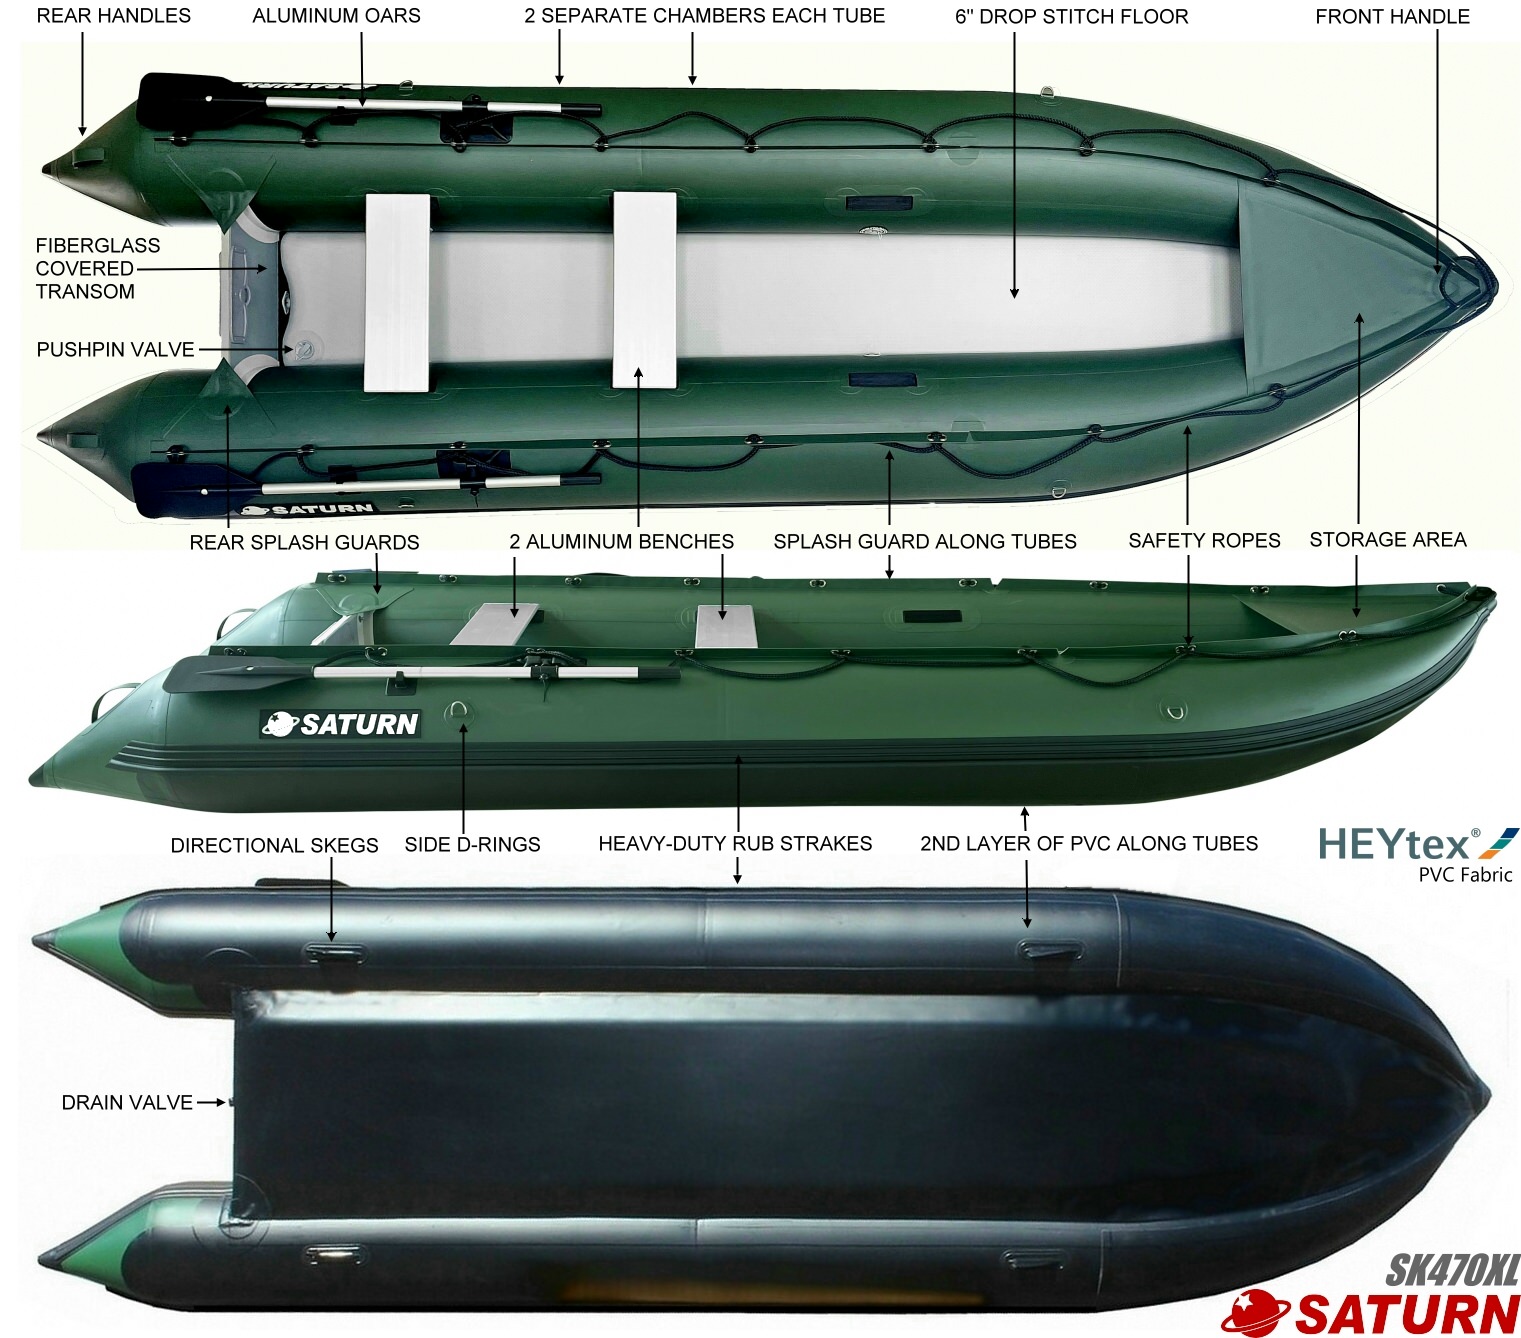 Saturn KaBoat SK470XL Tech Specs.